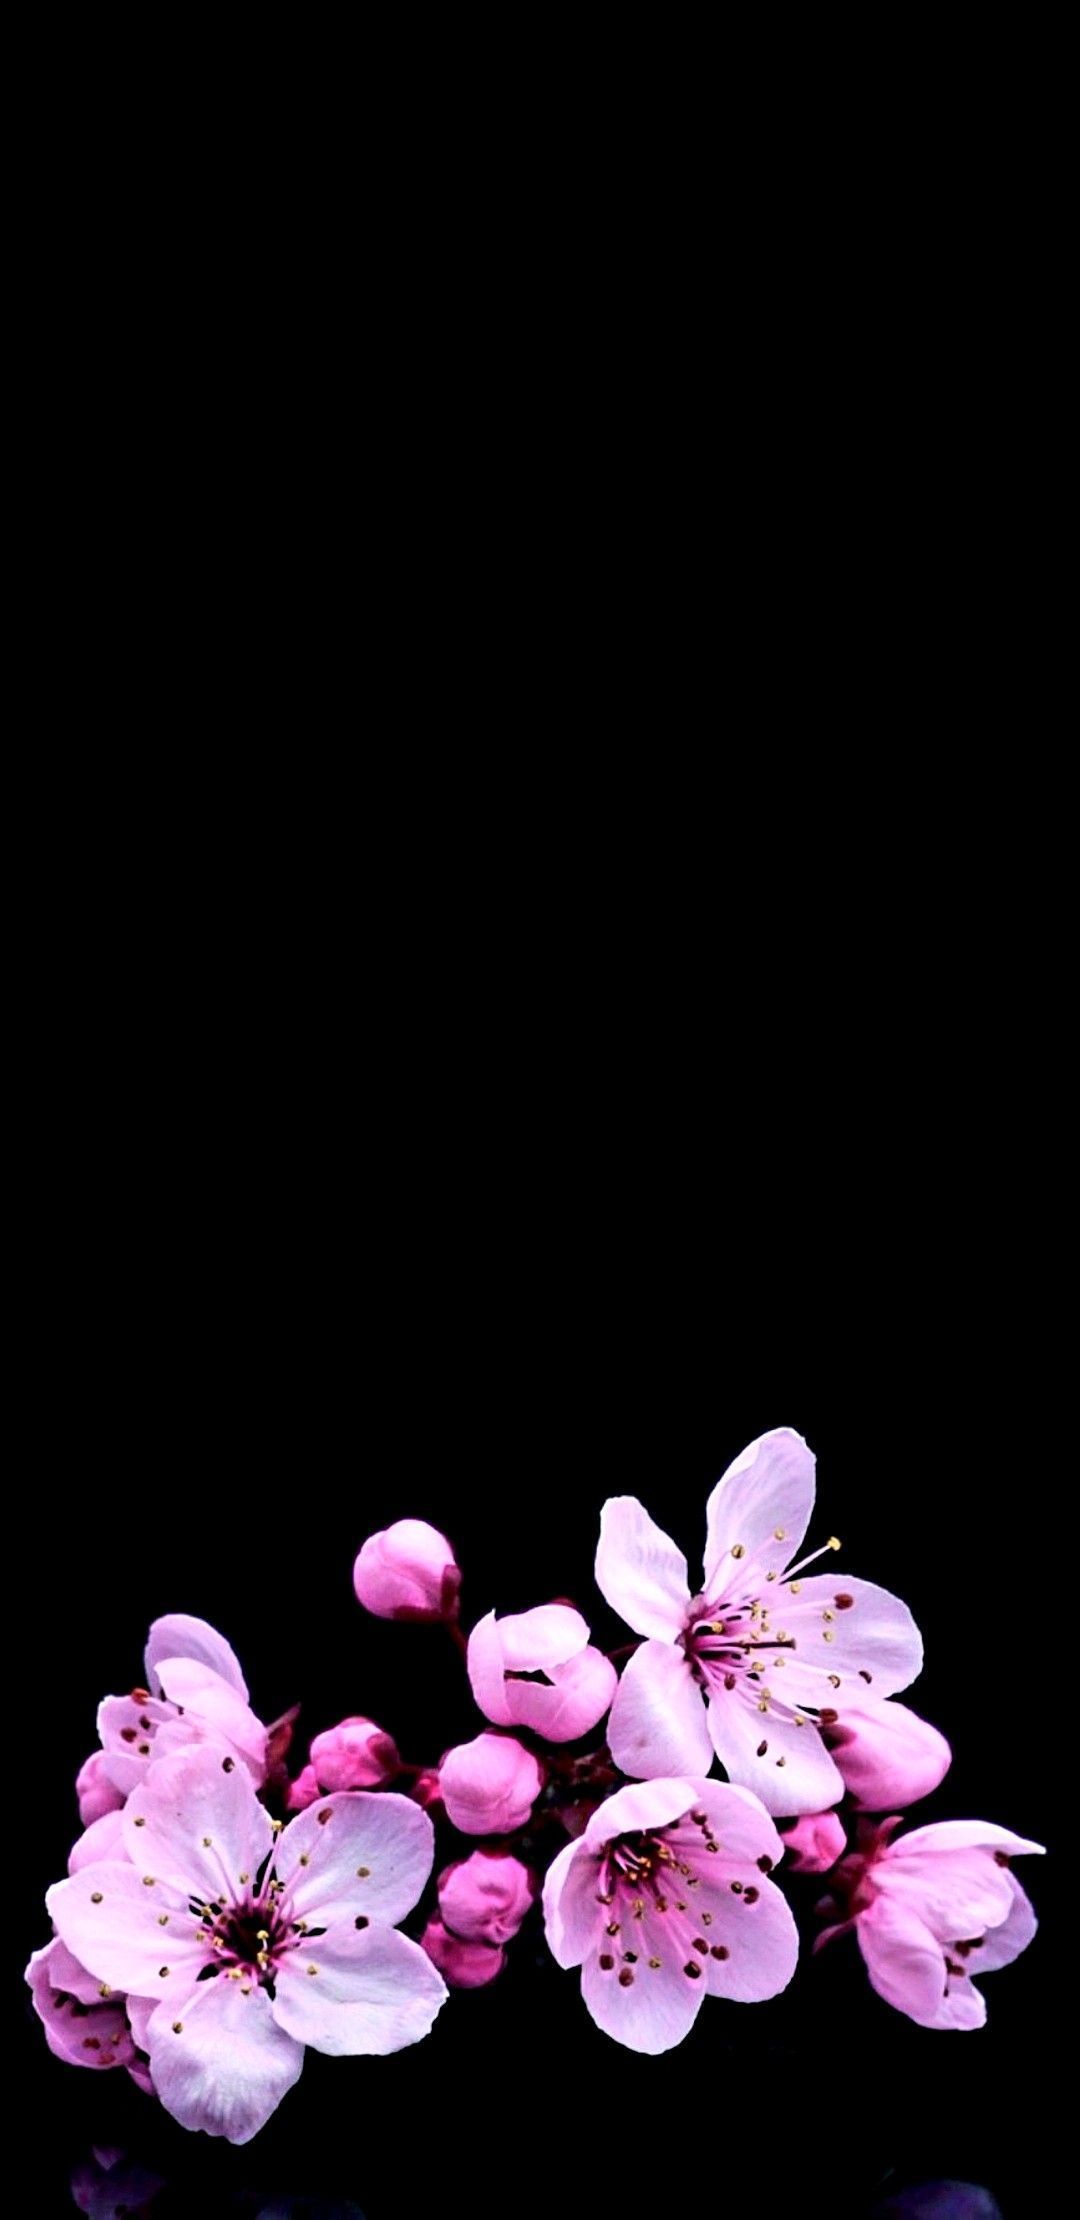 Dark Cherry Blossom Wallpaper Free Dark Cherry Blossom Background